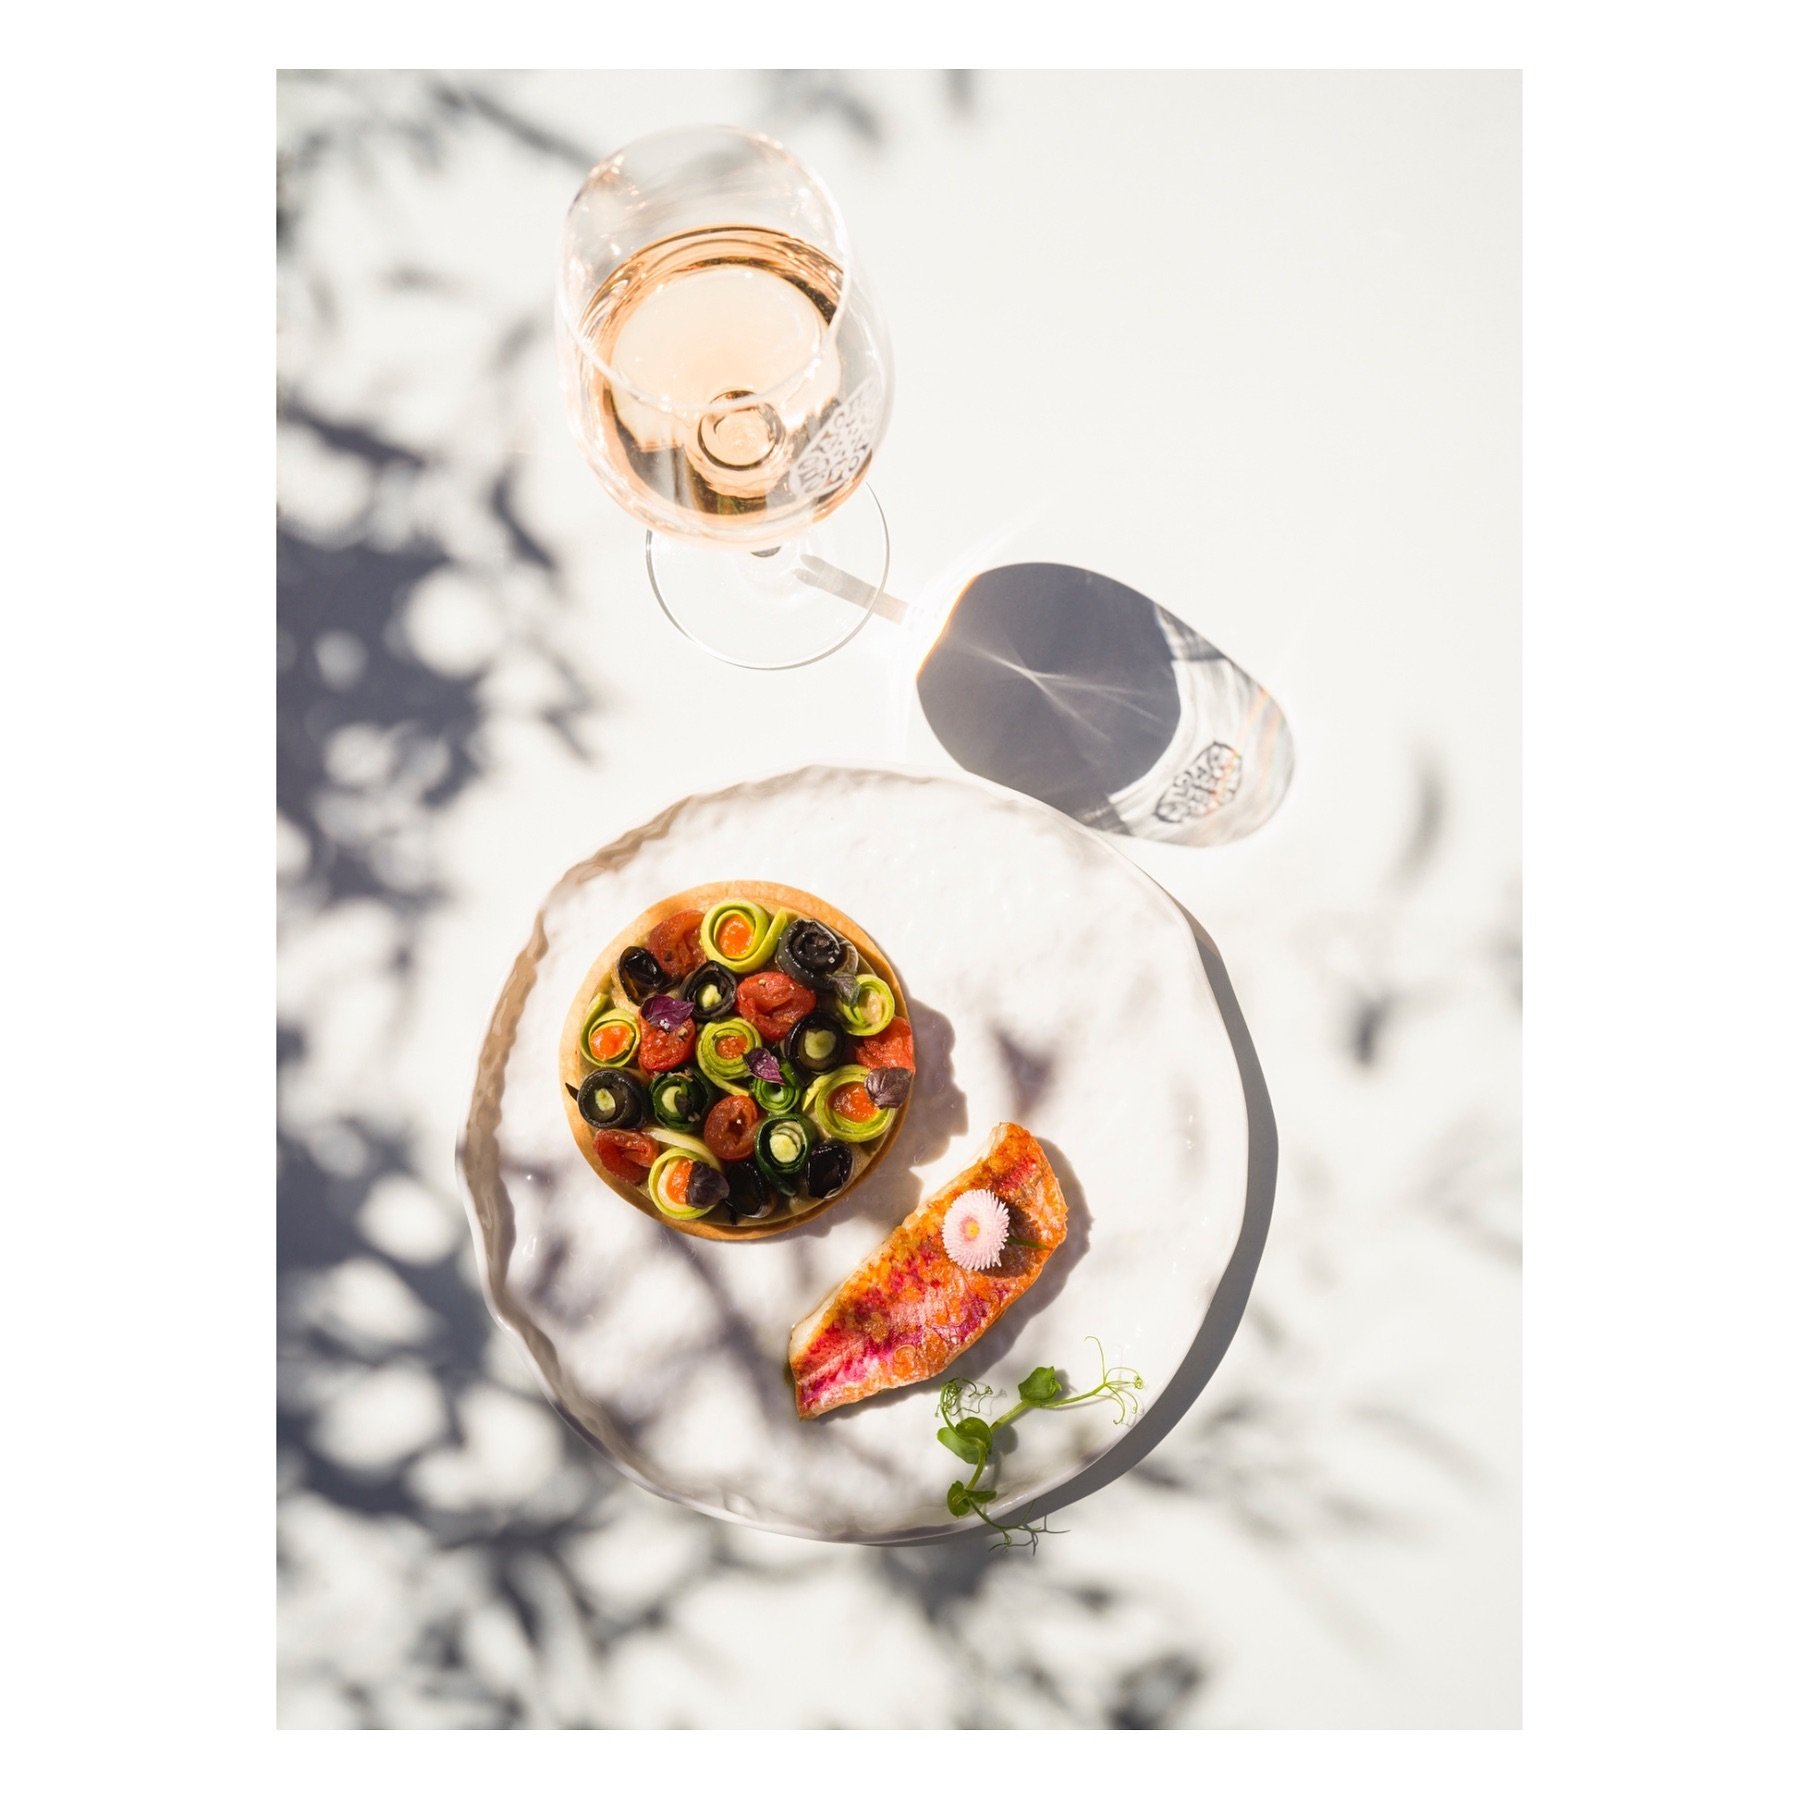 A table @hoteldeparissainttropez by FRANCK HAMEL @franckhamel
&bull;
#gastronomie #sunlight #hoteldeparissainttropez #photographeculinaire&nbsp;#foodphotographer #stilllifephotography&nbsp;#photoagency #franckhamel&nbsp;#valeriepaumelleagent